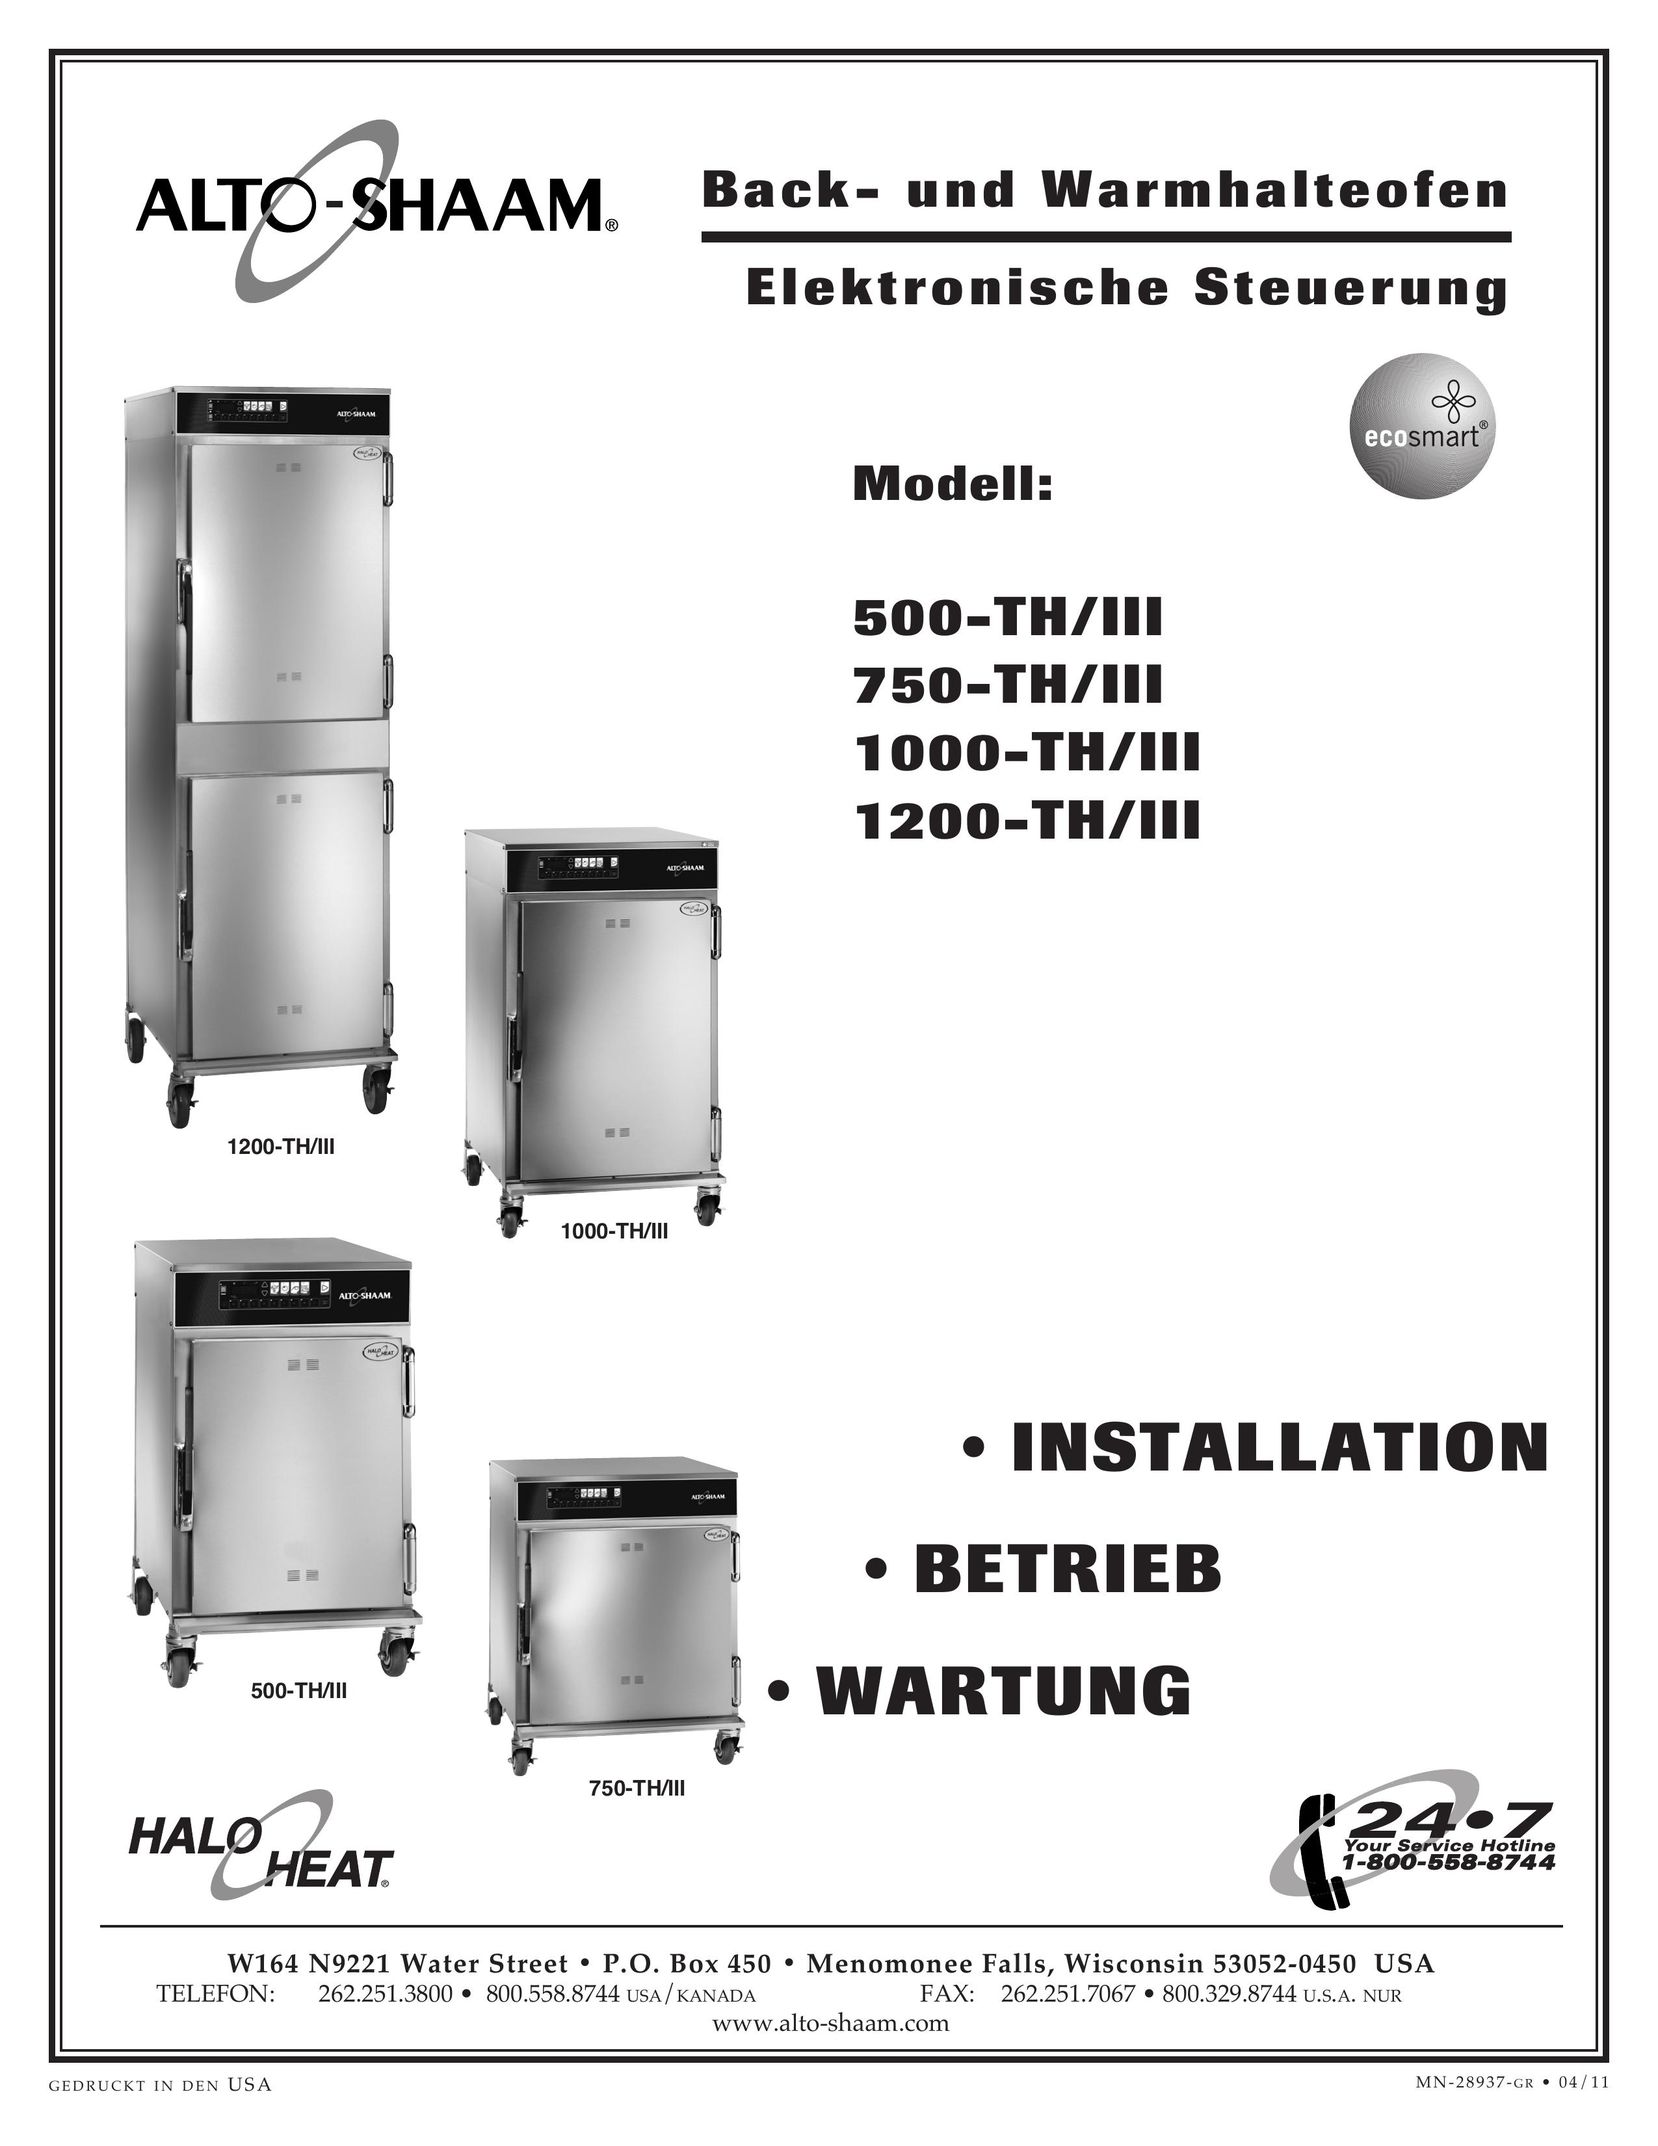 Alto-Shaam 1000-TH/III Air Conditioner User Manual